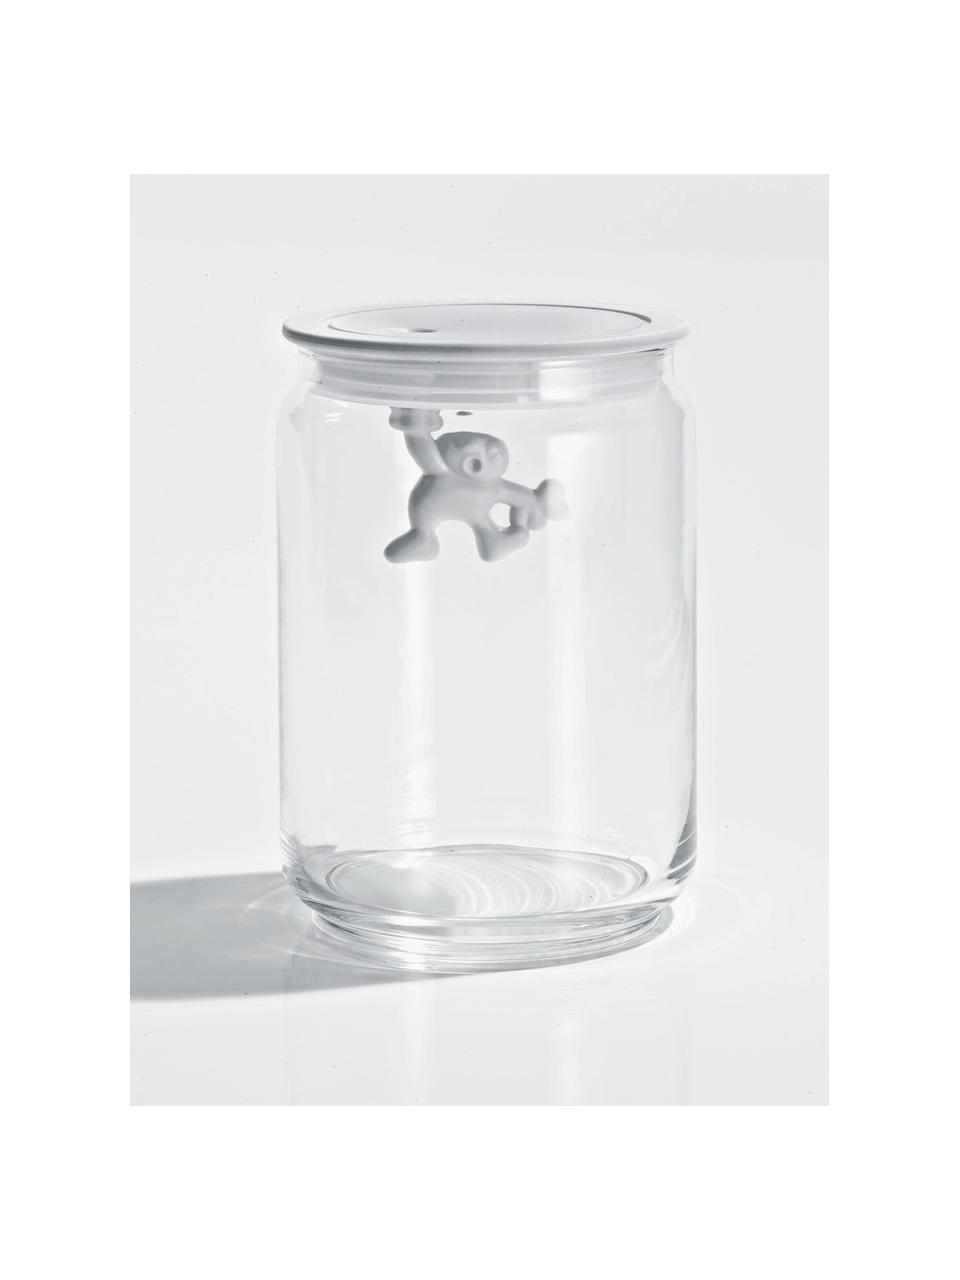 Bote de almacenamiento Gianni, 15 cm, Vidrio, resina termoplástica, Blanco, transparente, Ø 11 x Al 15 cm